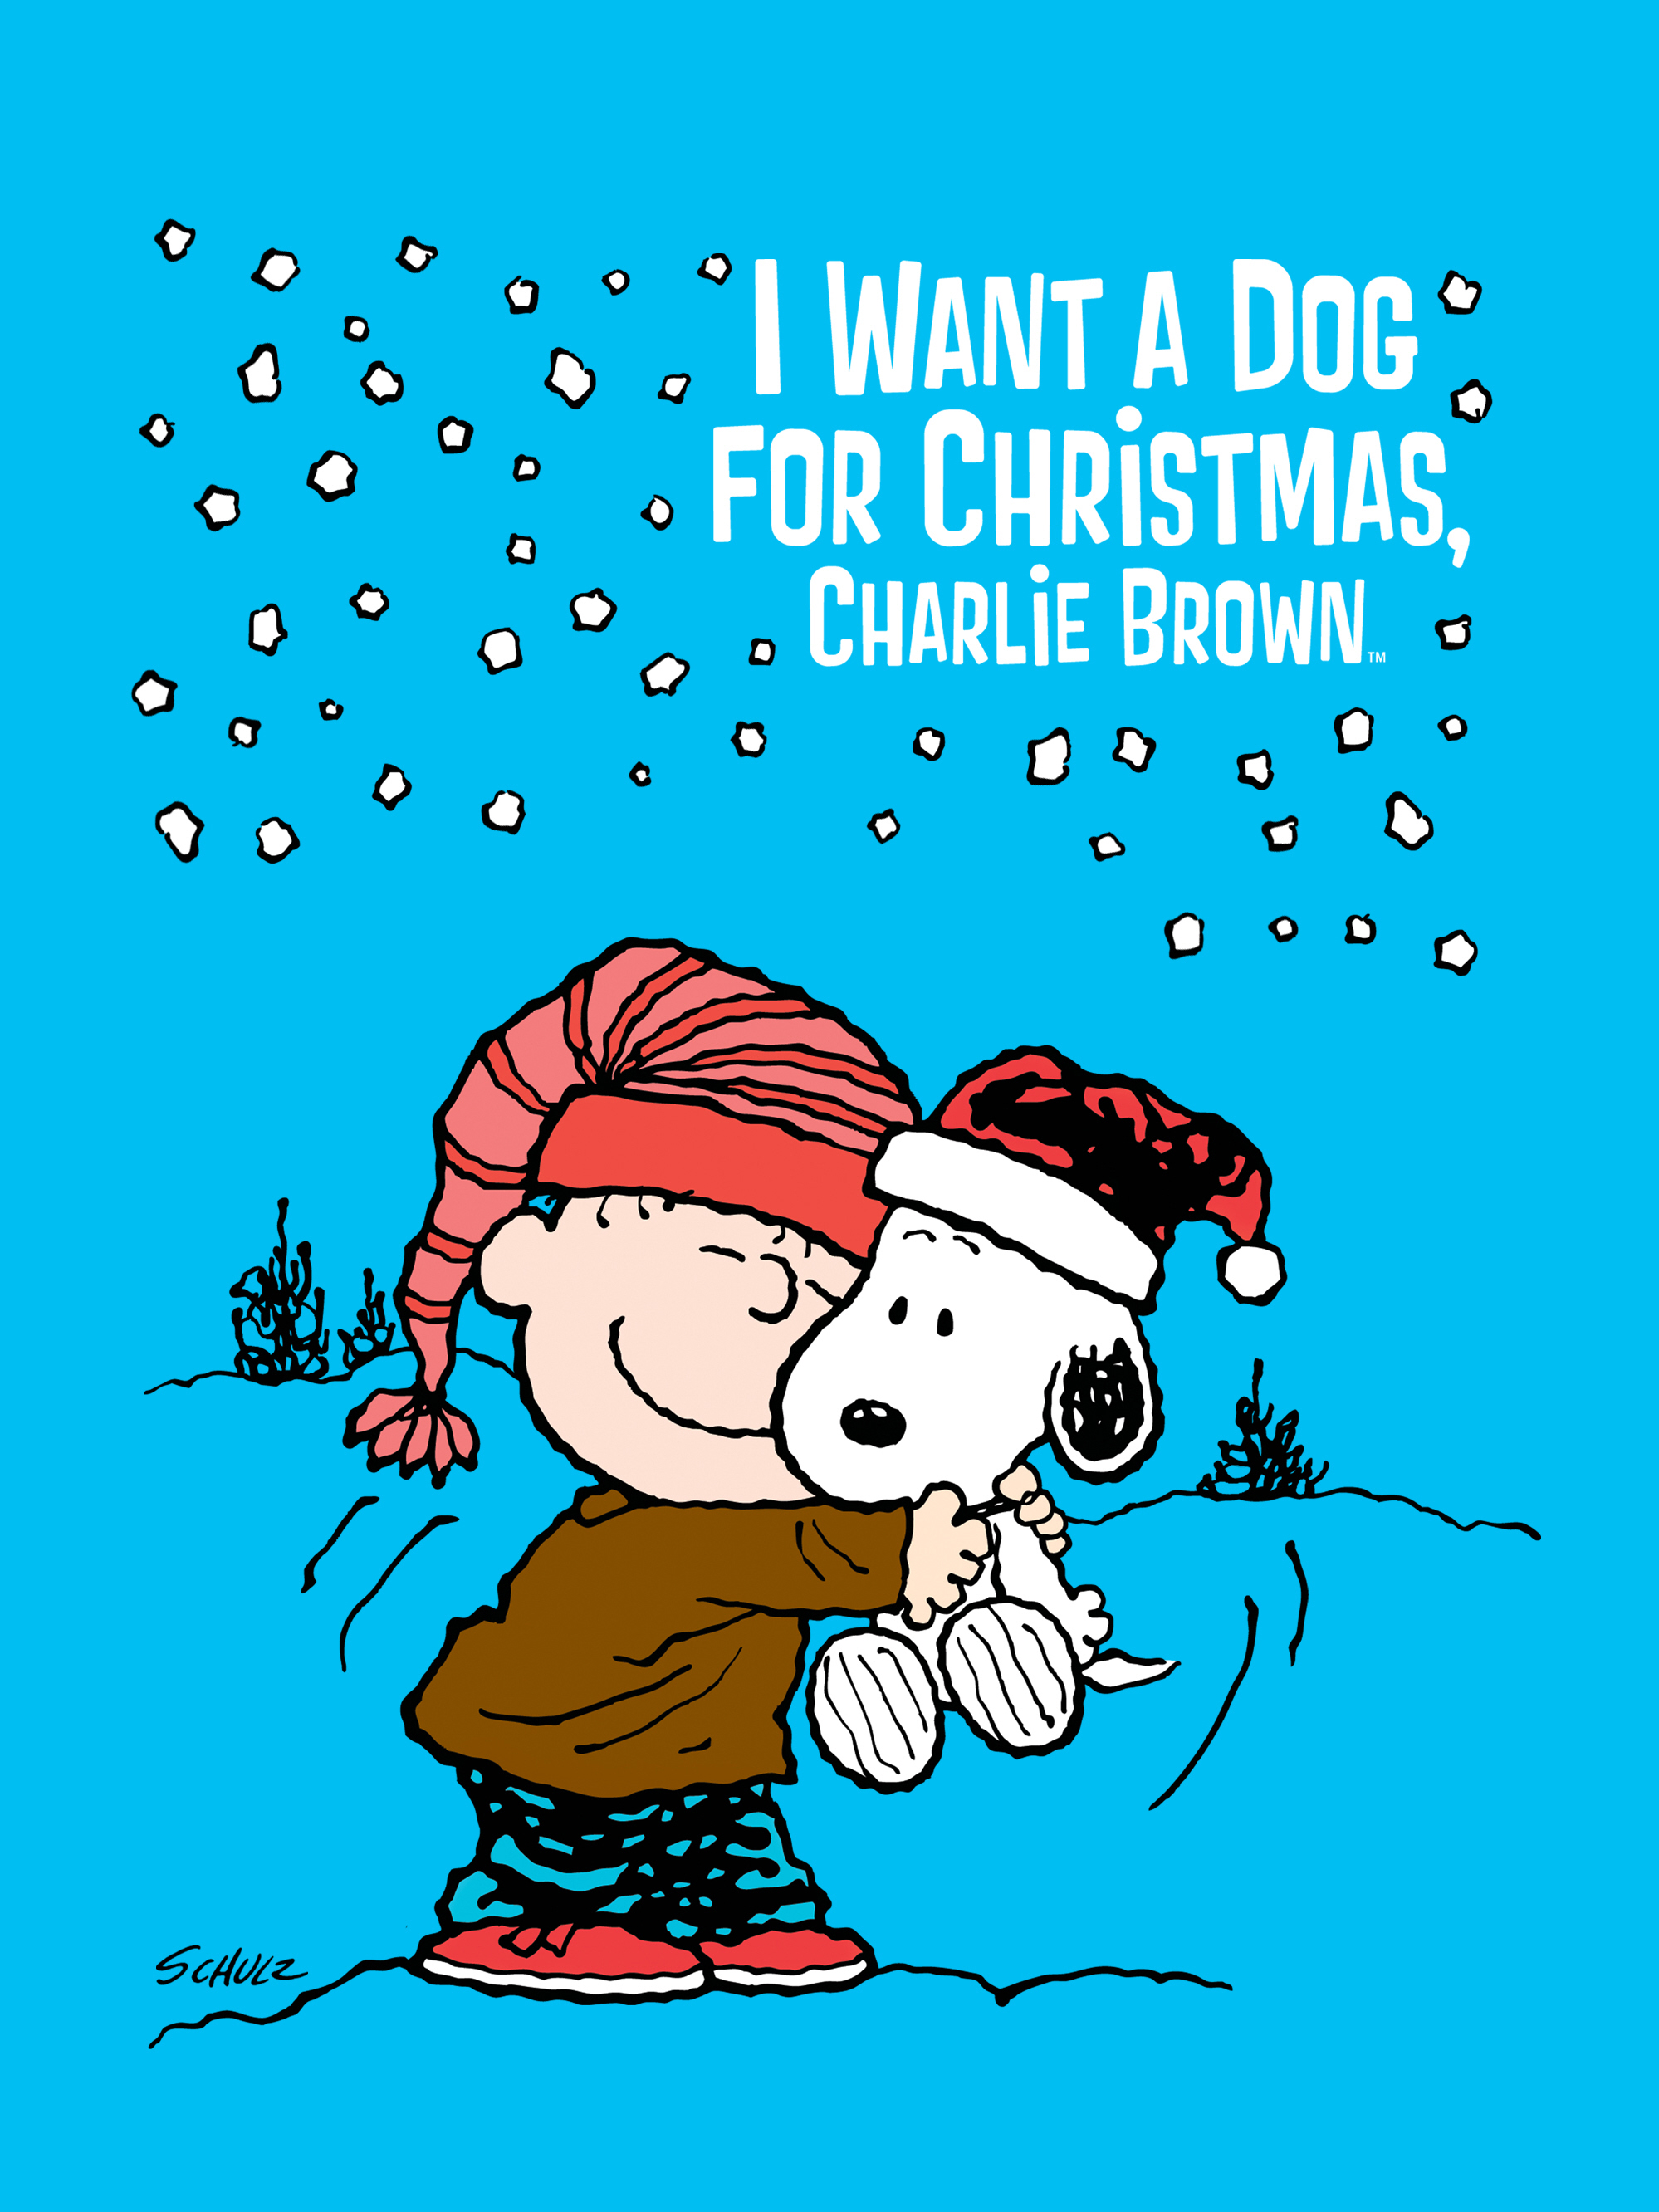 I want a dog for Christmas, Charlie Brown!